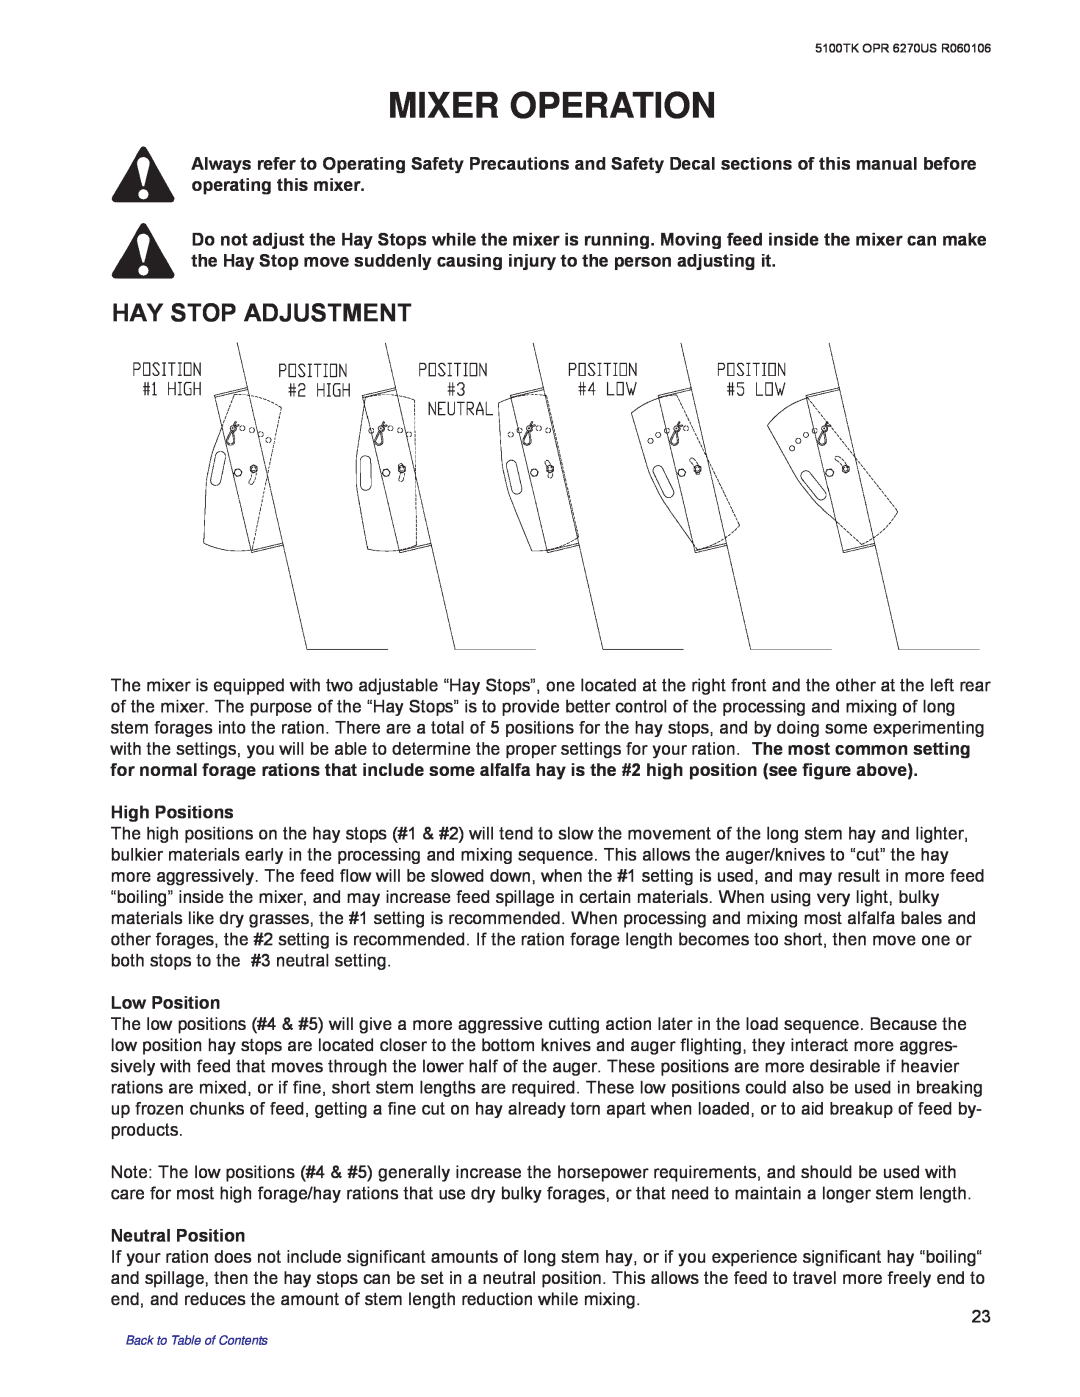 Kuhn Rikon 5100 instruction manual Mixer Operation, Hay Stop Adjustment, High Positions 